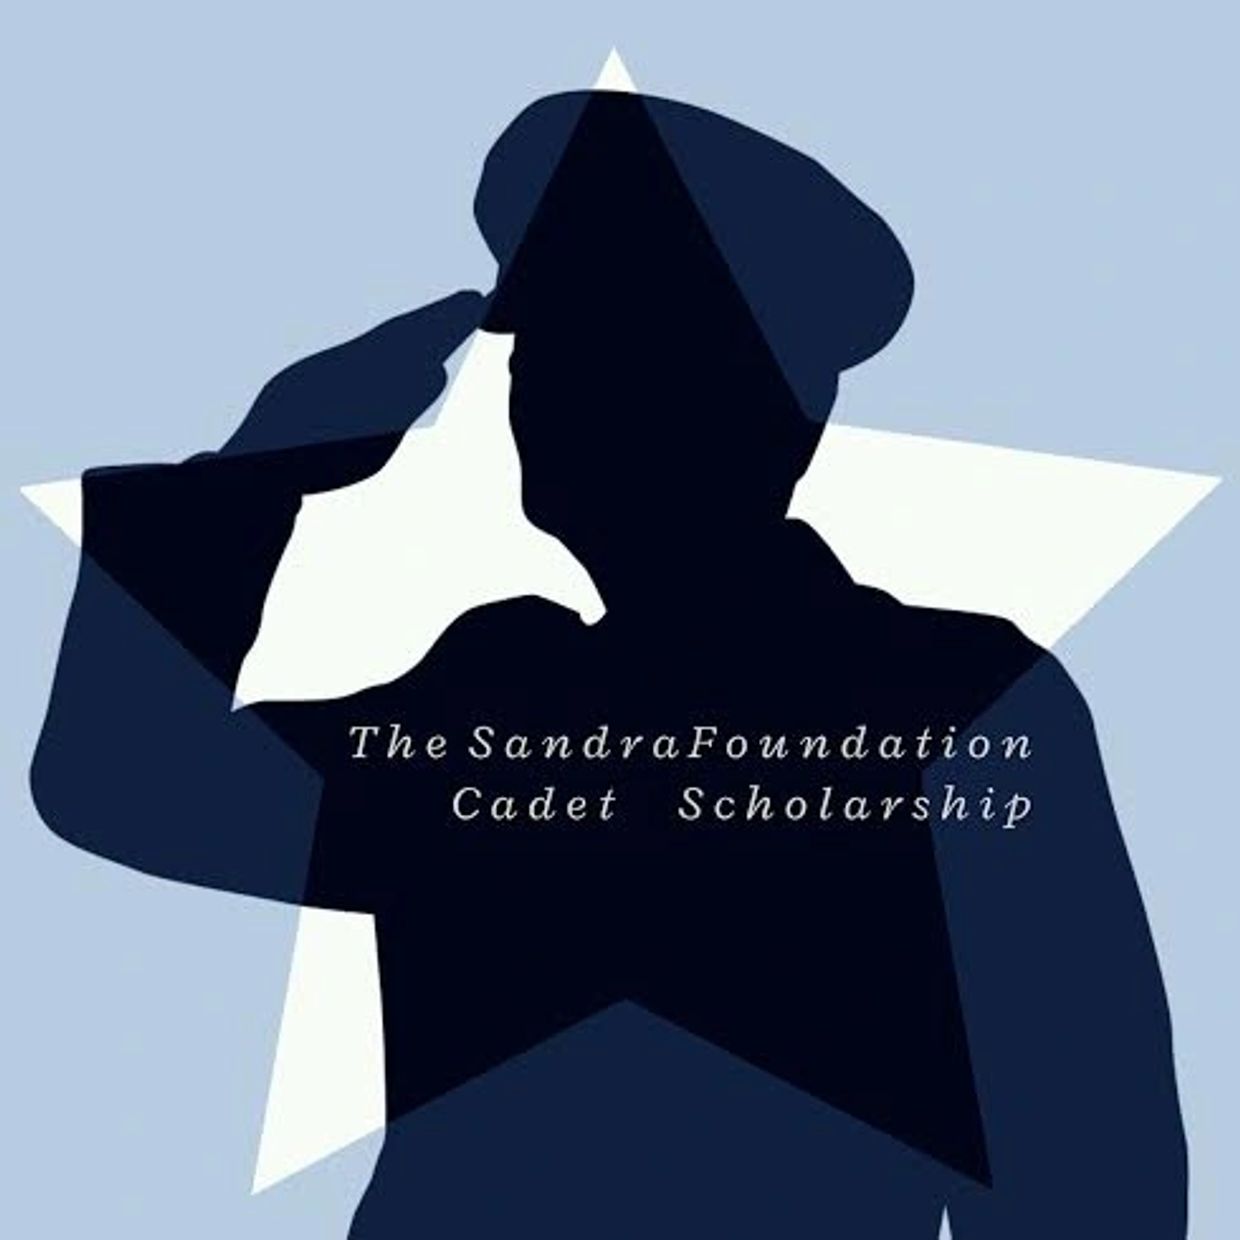 the sandra foundation cadet scholarship logo